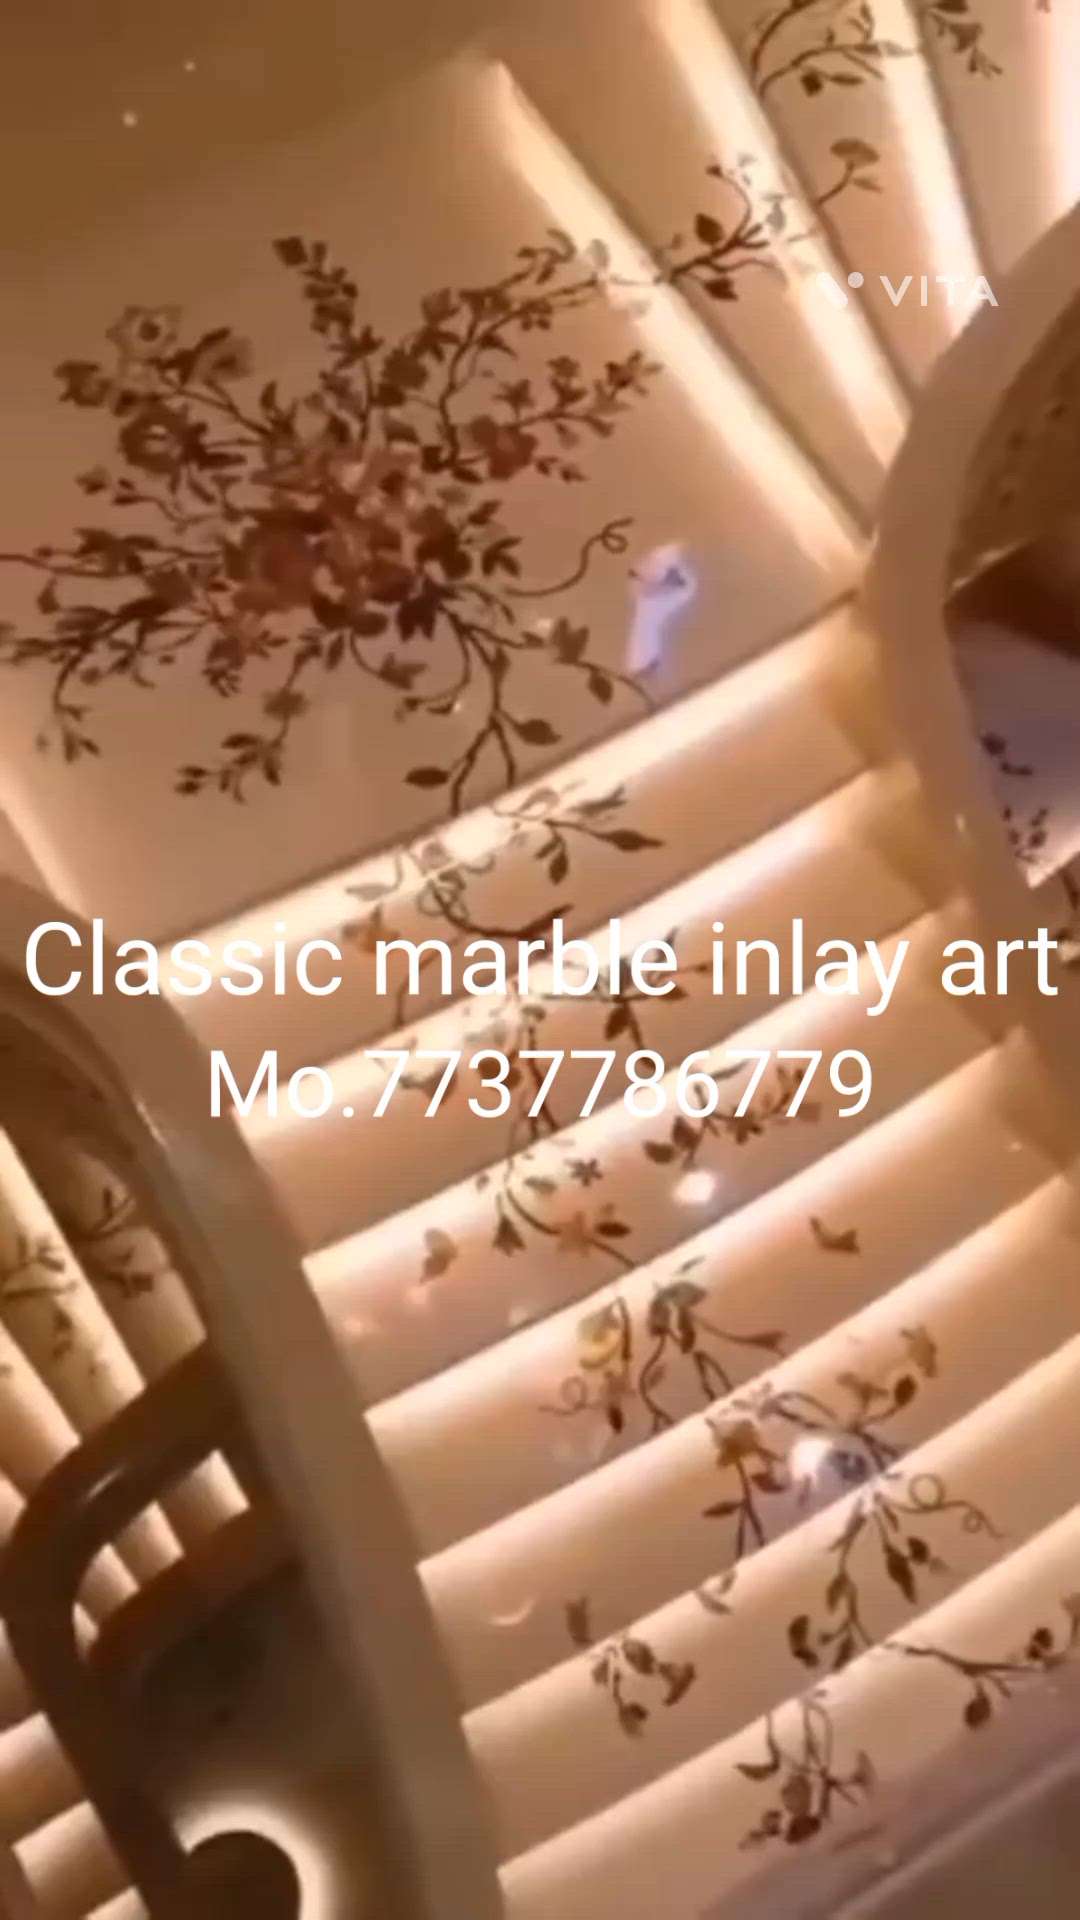 Classic marble inlay art work in hydrabad videos 
 #videoupload  #viralkolo #HouseDesigns #MarbleFlooring  #classicmarbleinlay #hydrabad